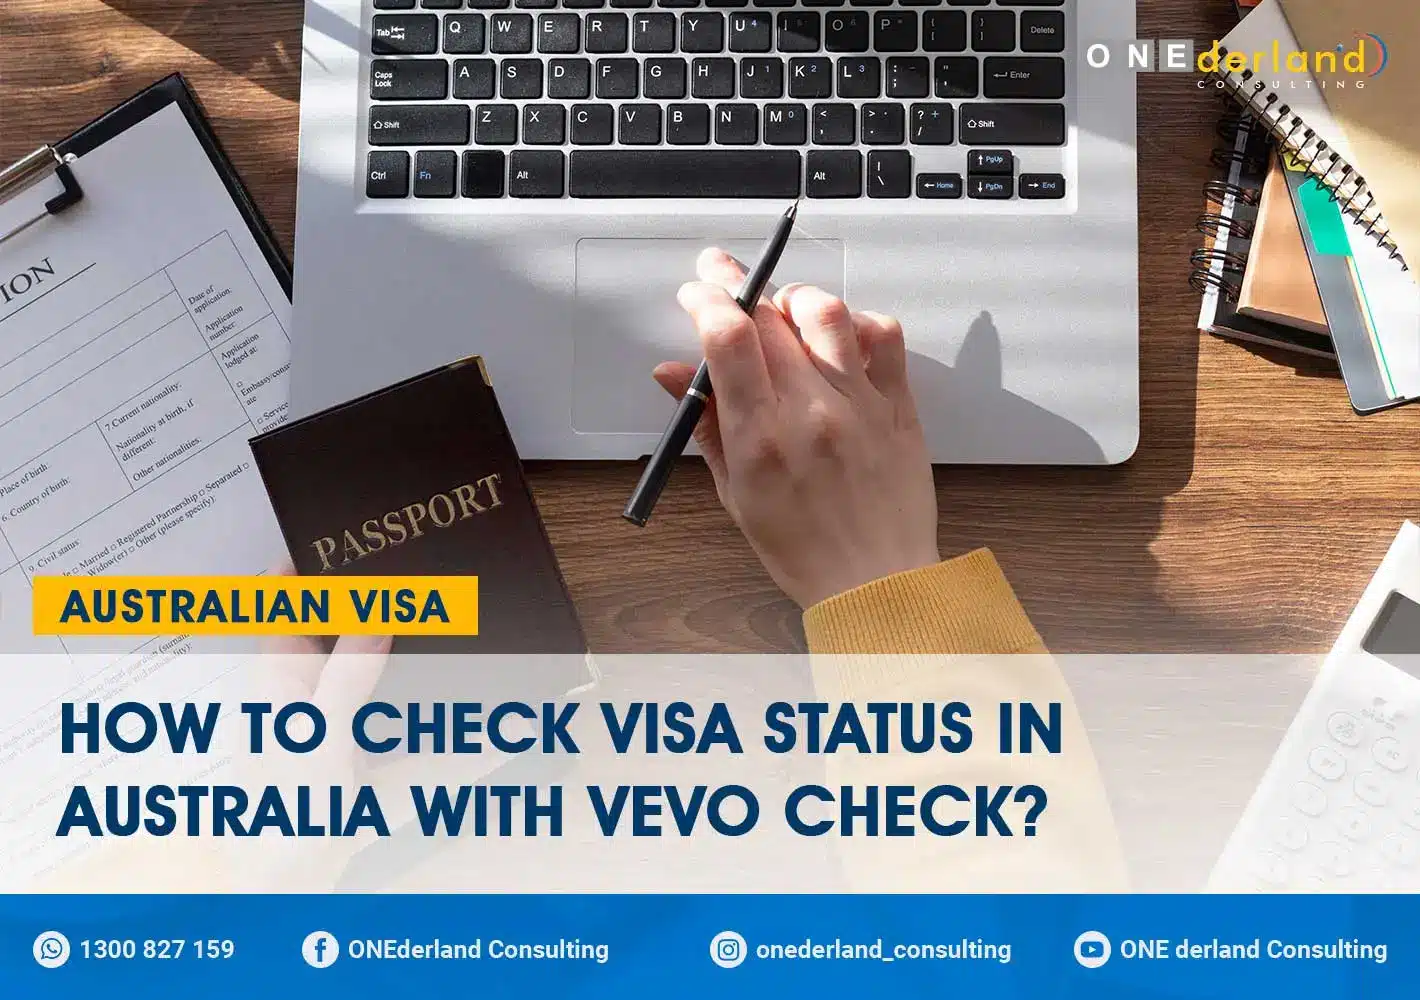 How to Check Visa Status in Australia with VEVO Check?